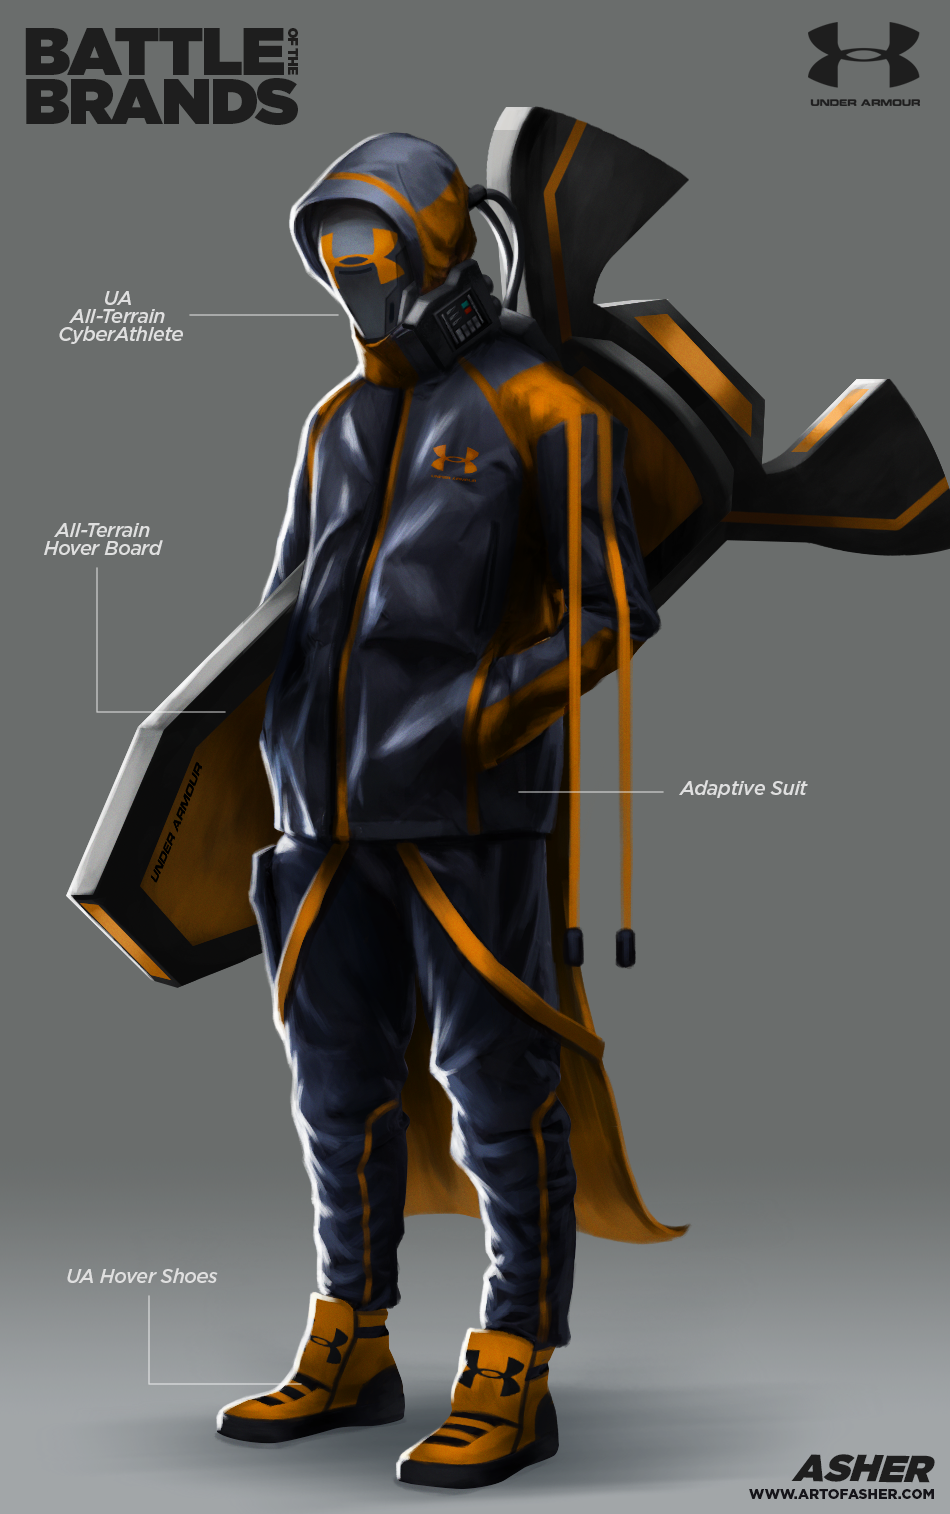 ASher Ben Alpay Art Of Asher Nike Under Armour adidas brands sports Scifi concept art mech robot extreme snow boarding blue